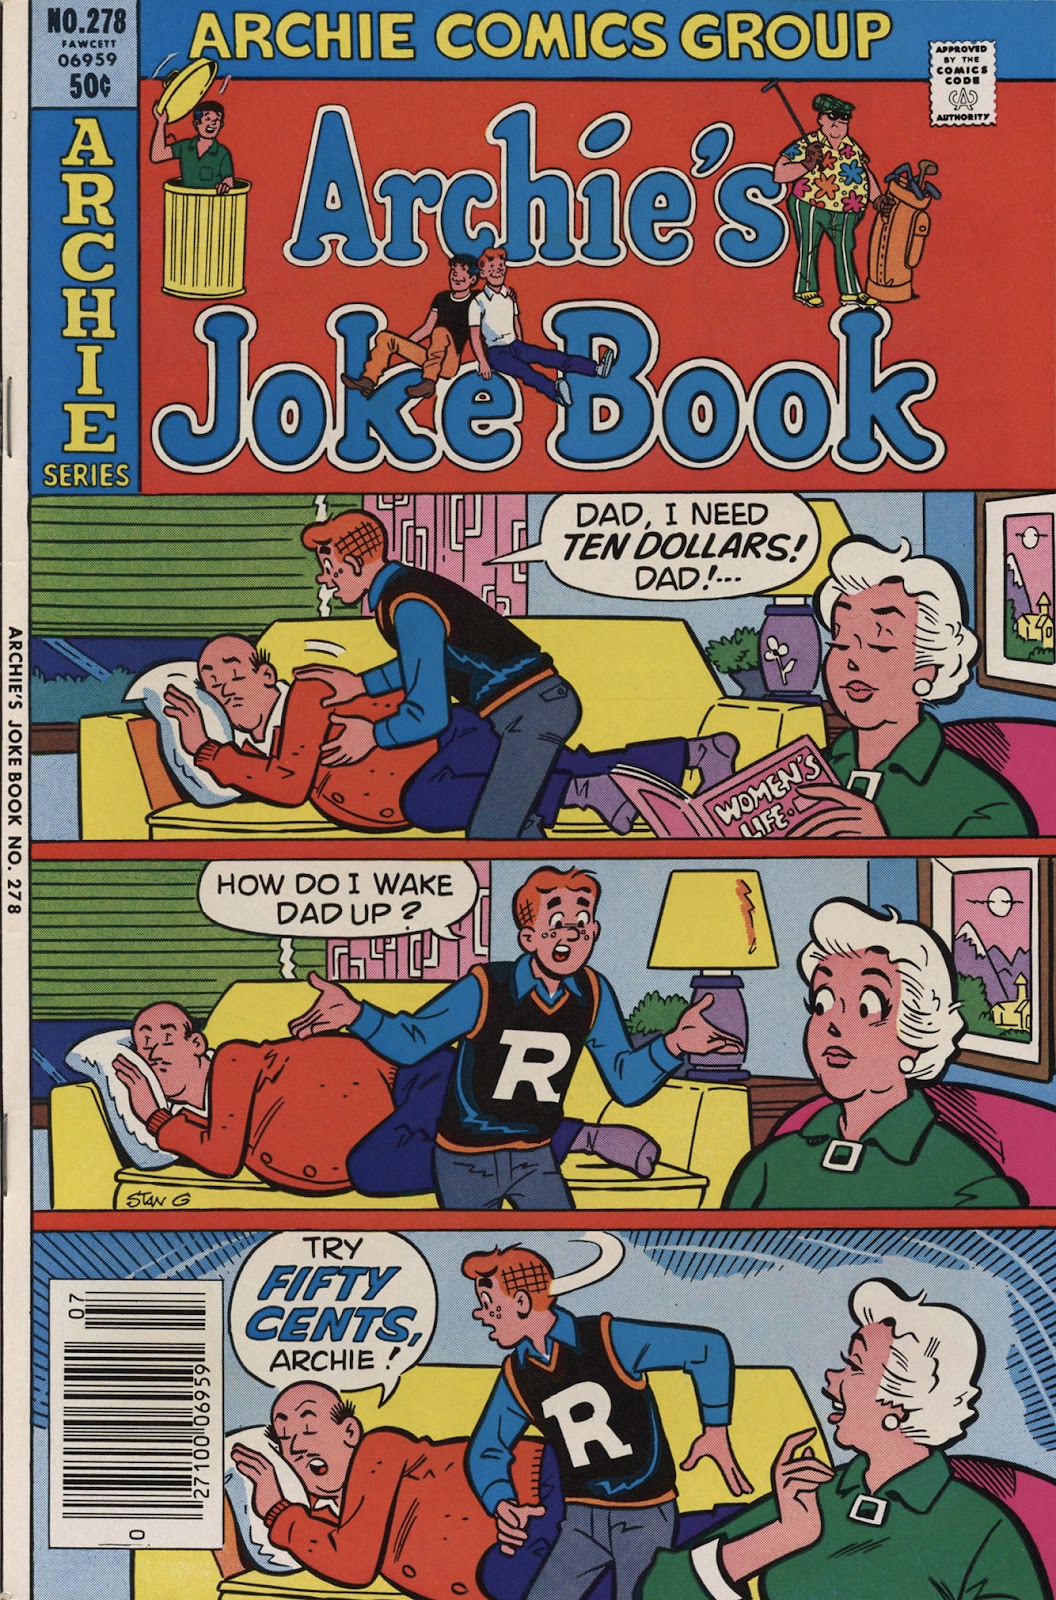 Archie's Joke Book Magazine issue 278 - Page 1